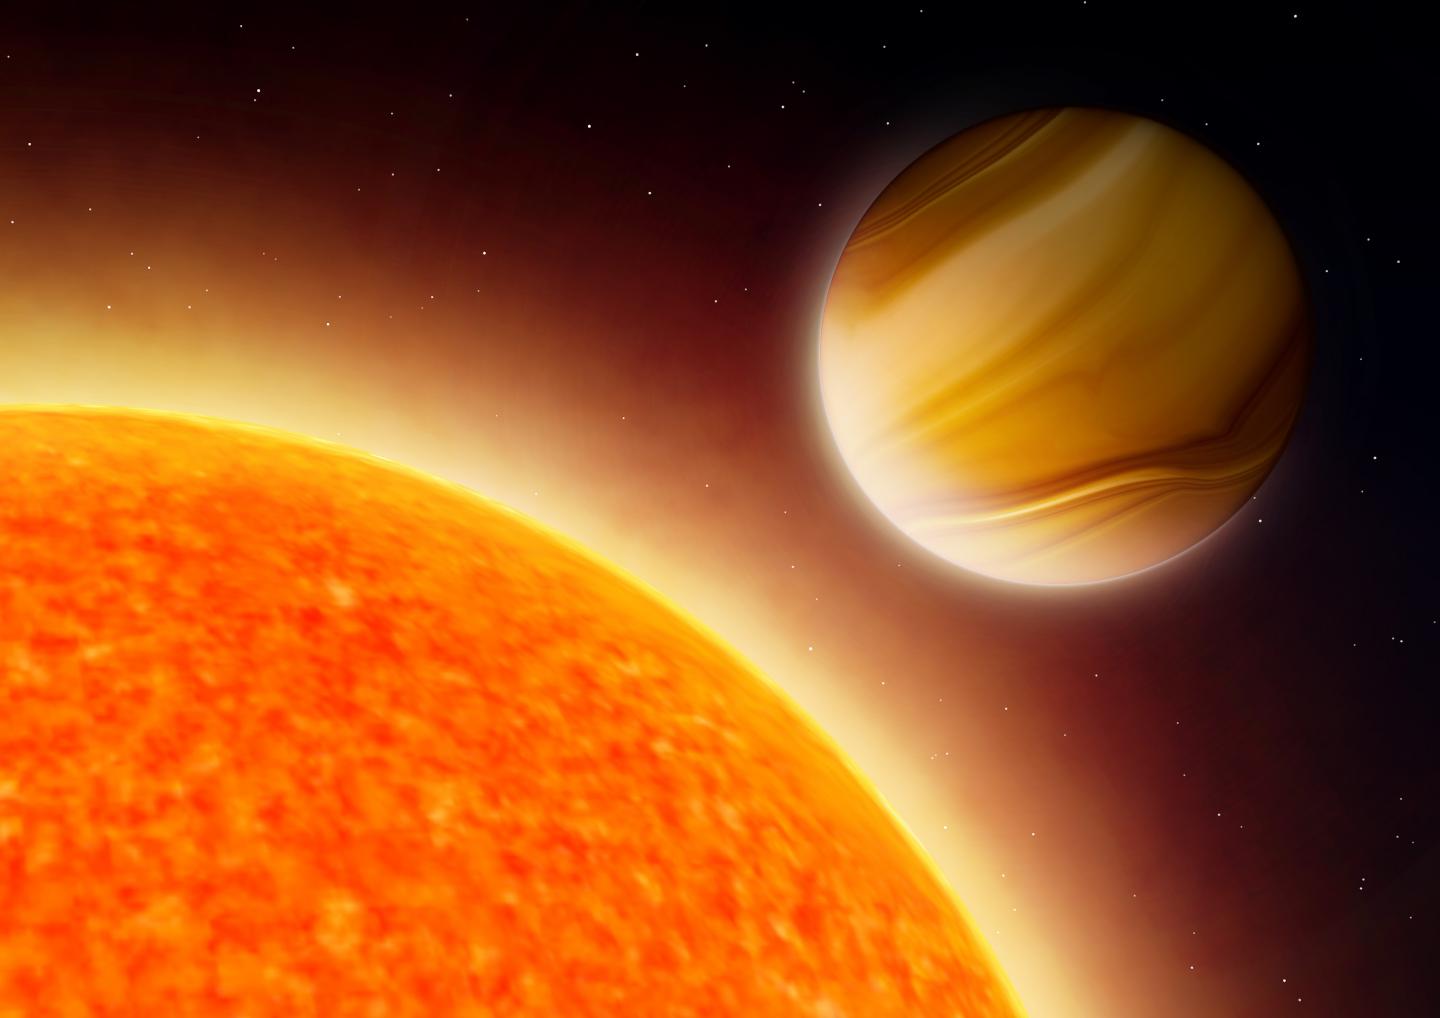 Artist's Impression of Giant Exoplanet